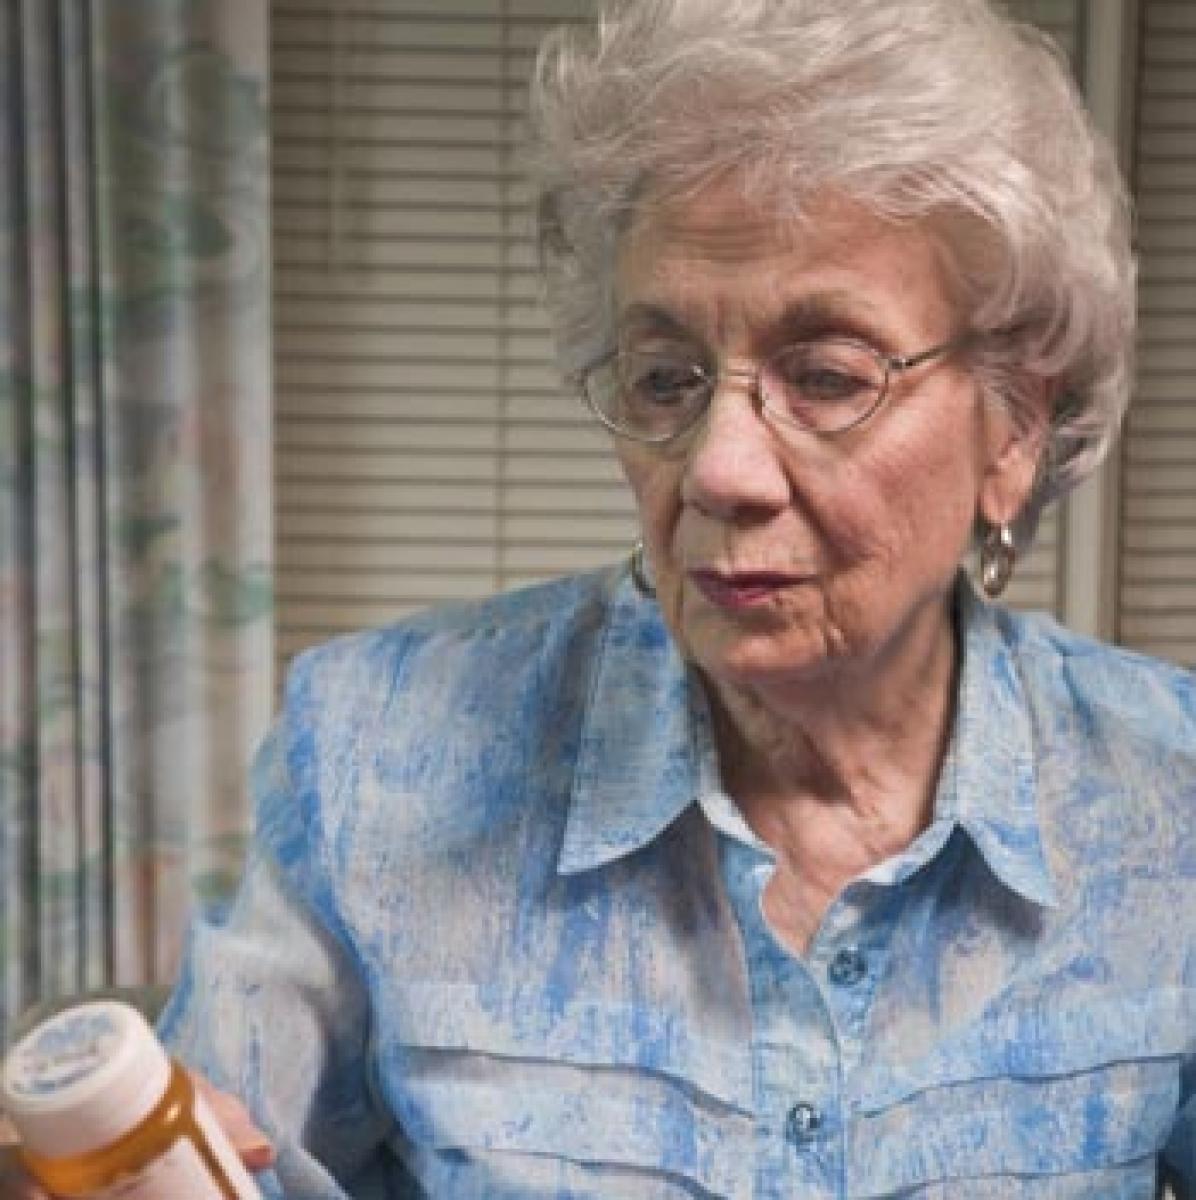 Calcium pills may put elderly women at heart attack risk